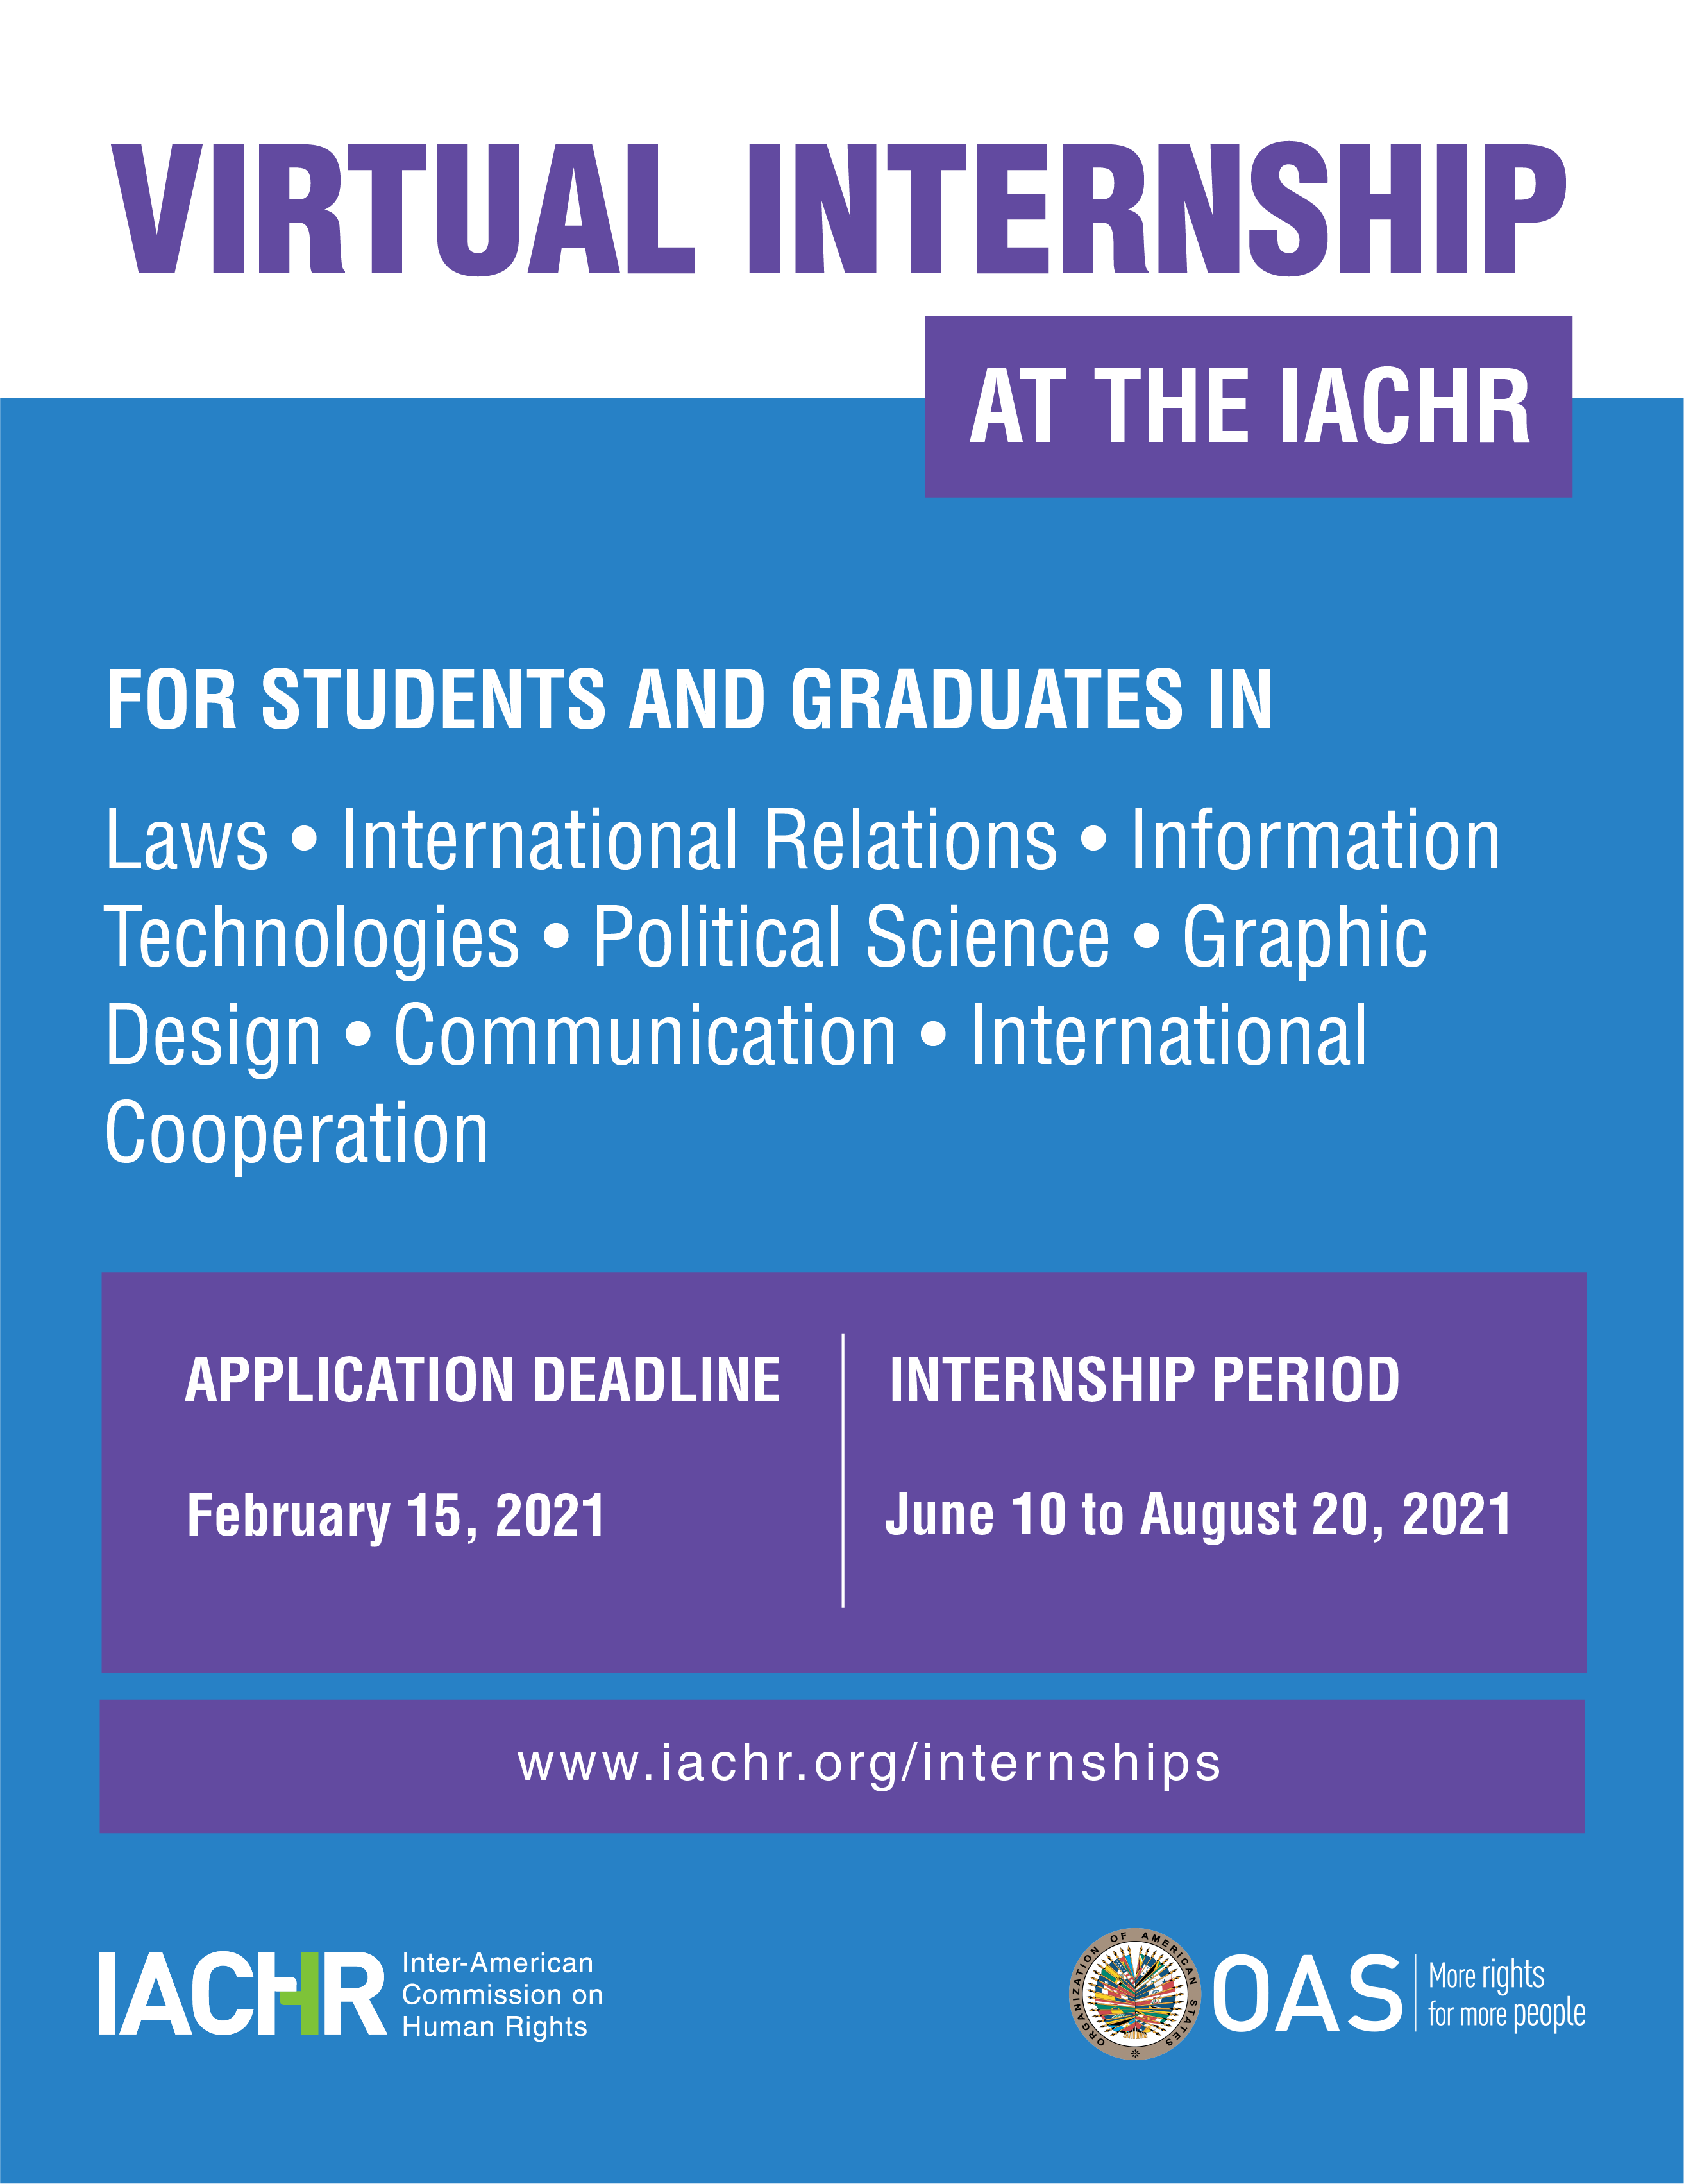 Internships at the IACHR